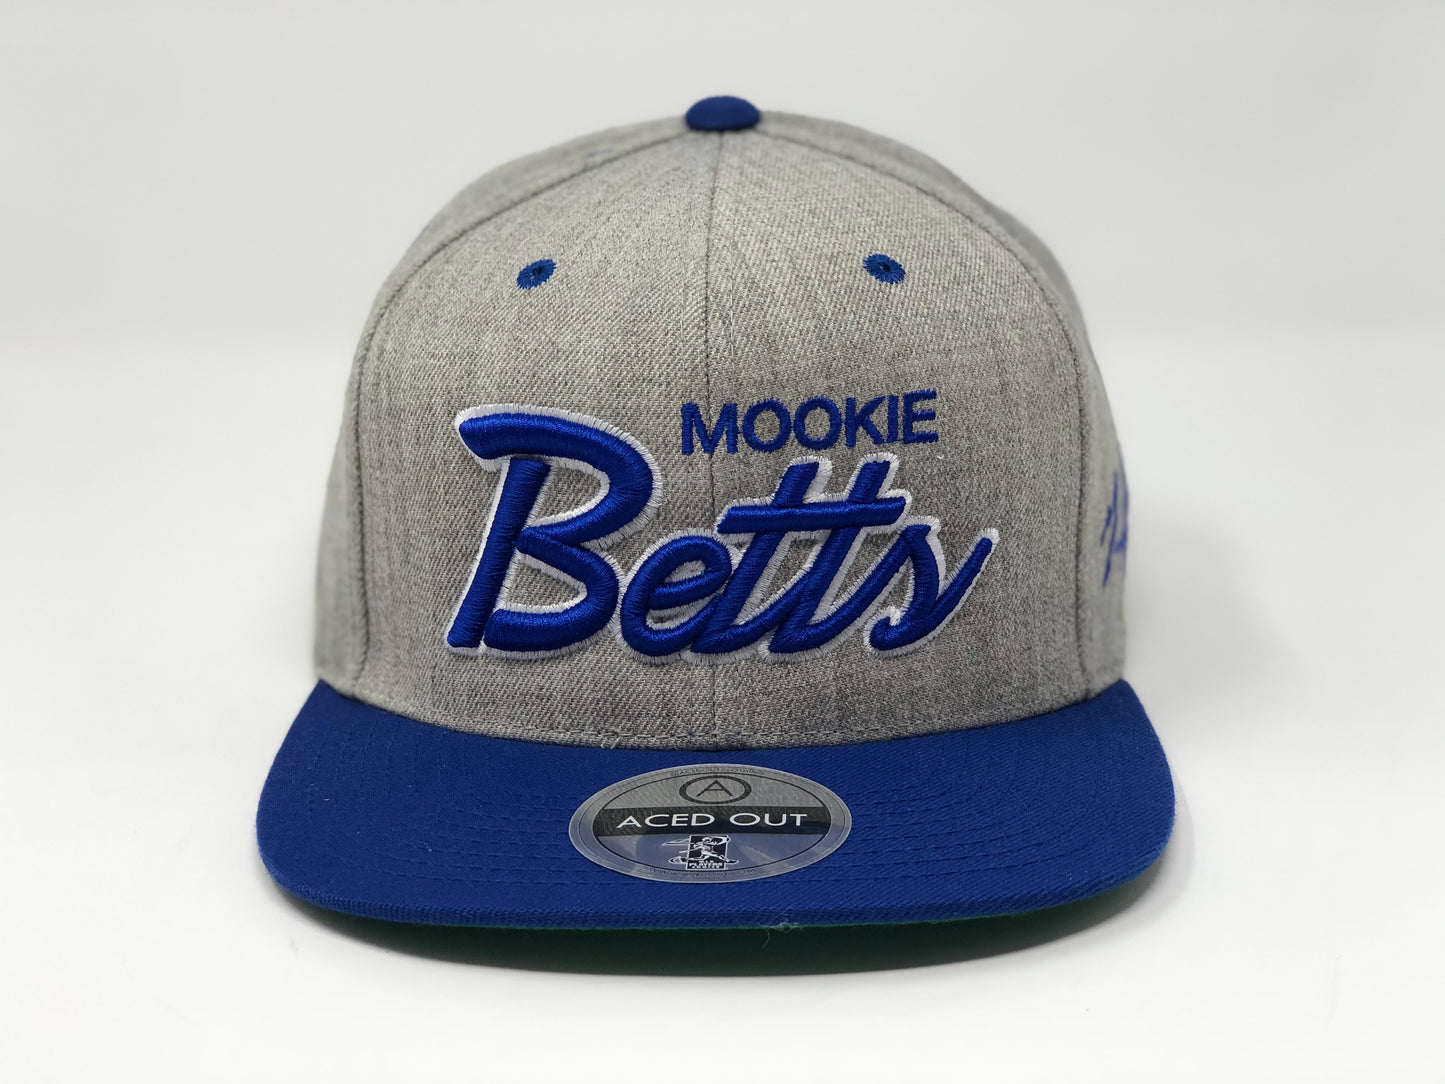 Mookie Betts Script Hat - Grey/Royal Snapback